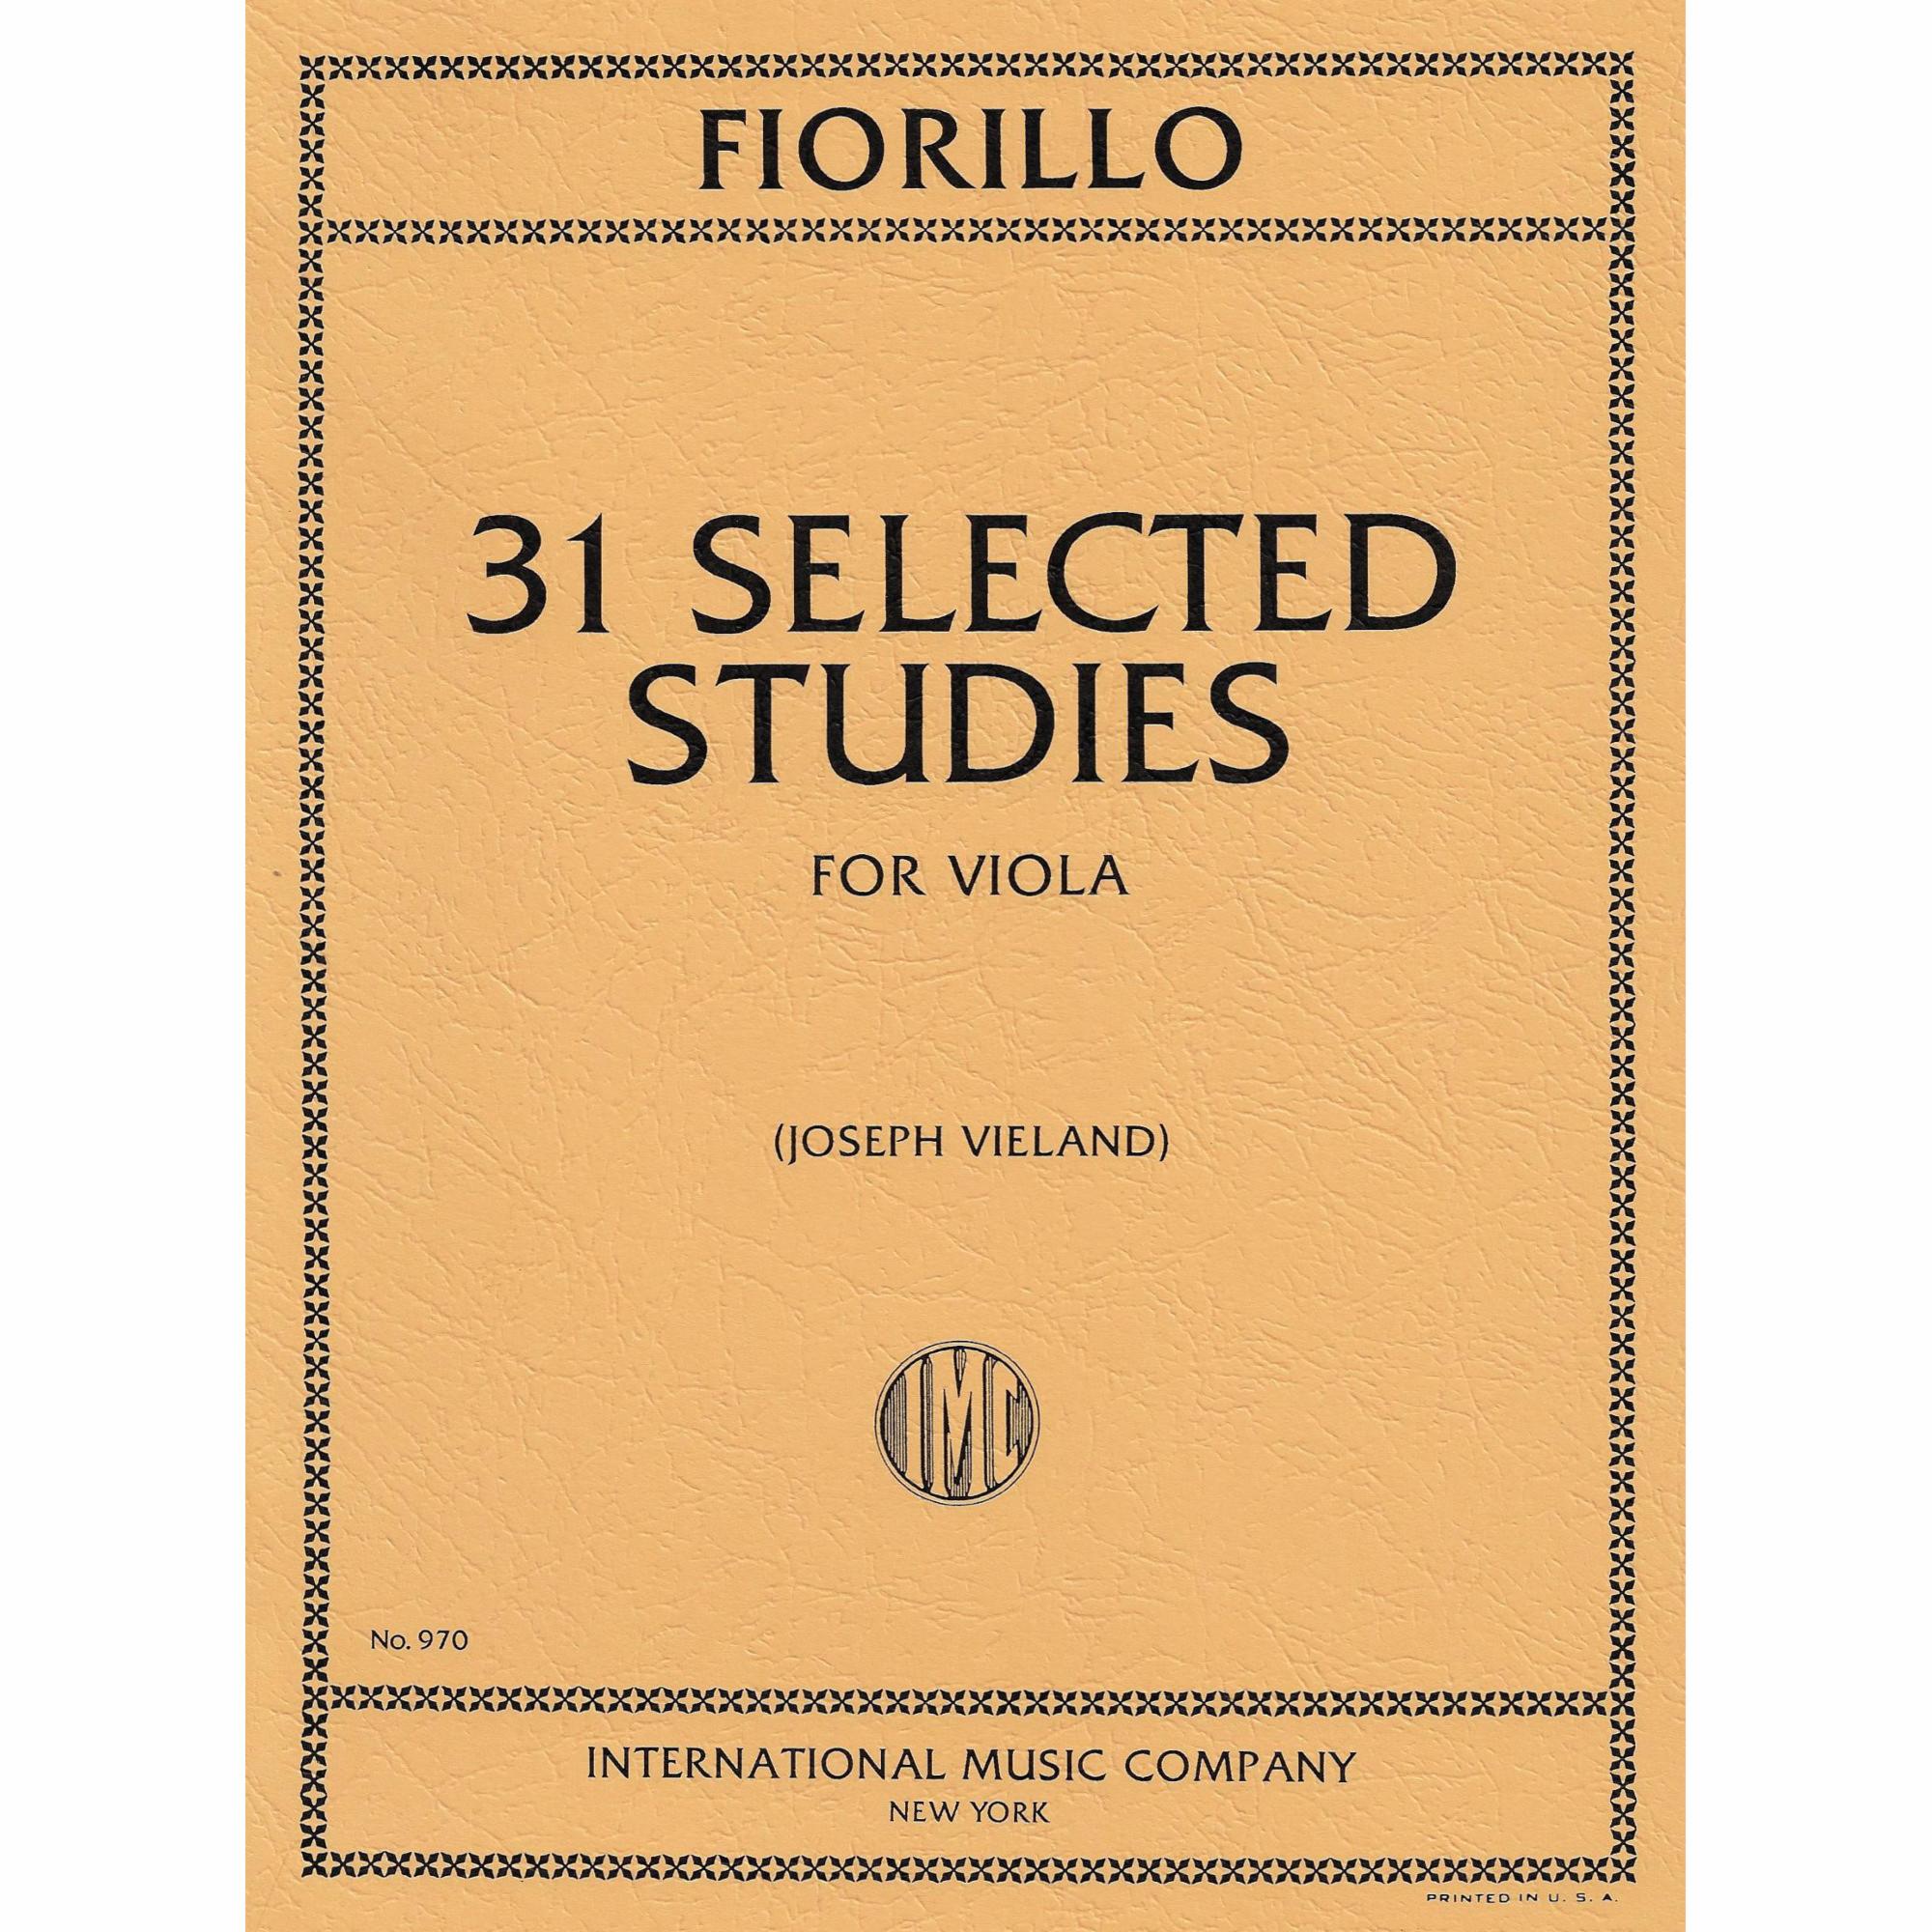 Fiorillo -- 31 Selected Studies for Viola